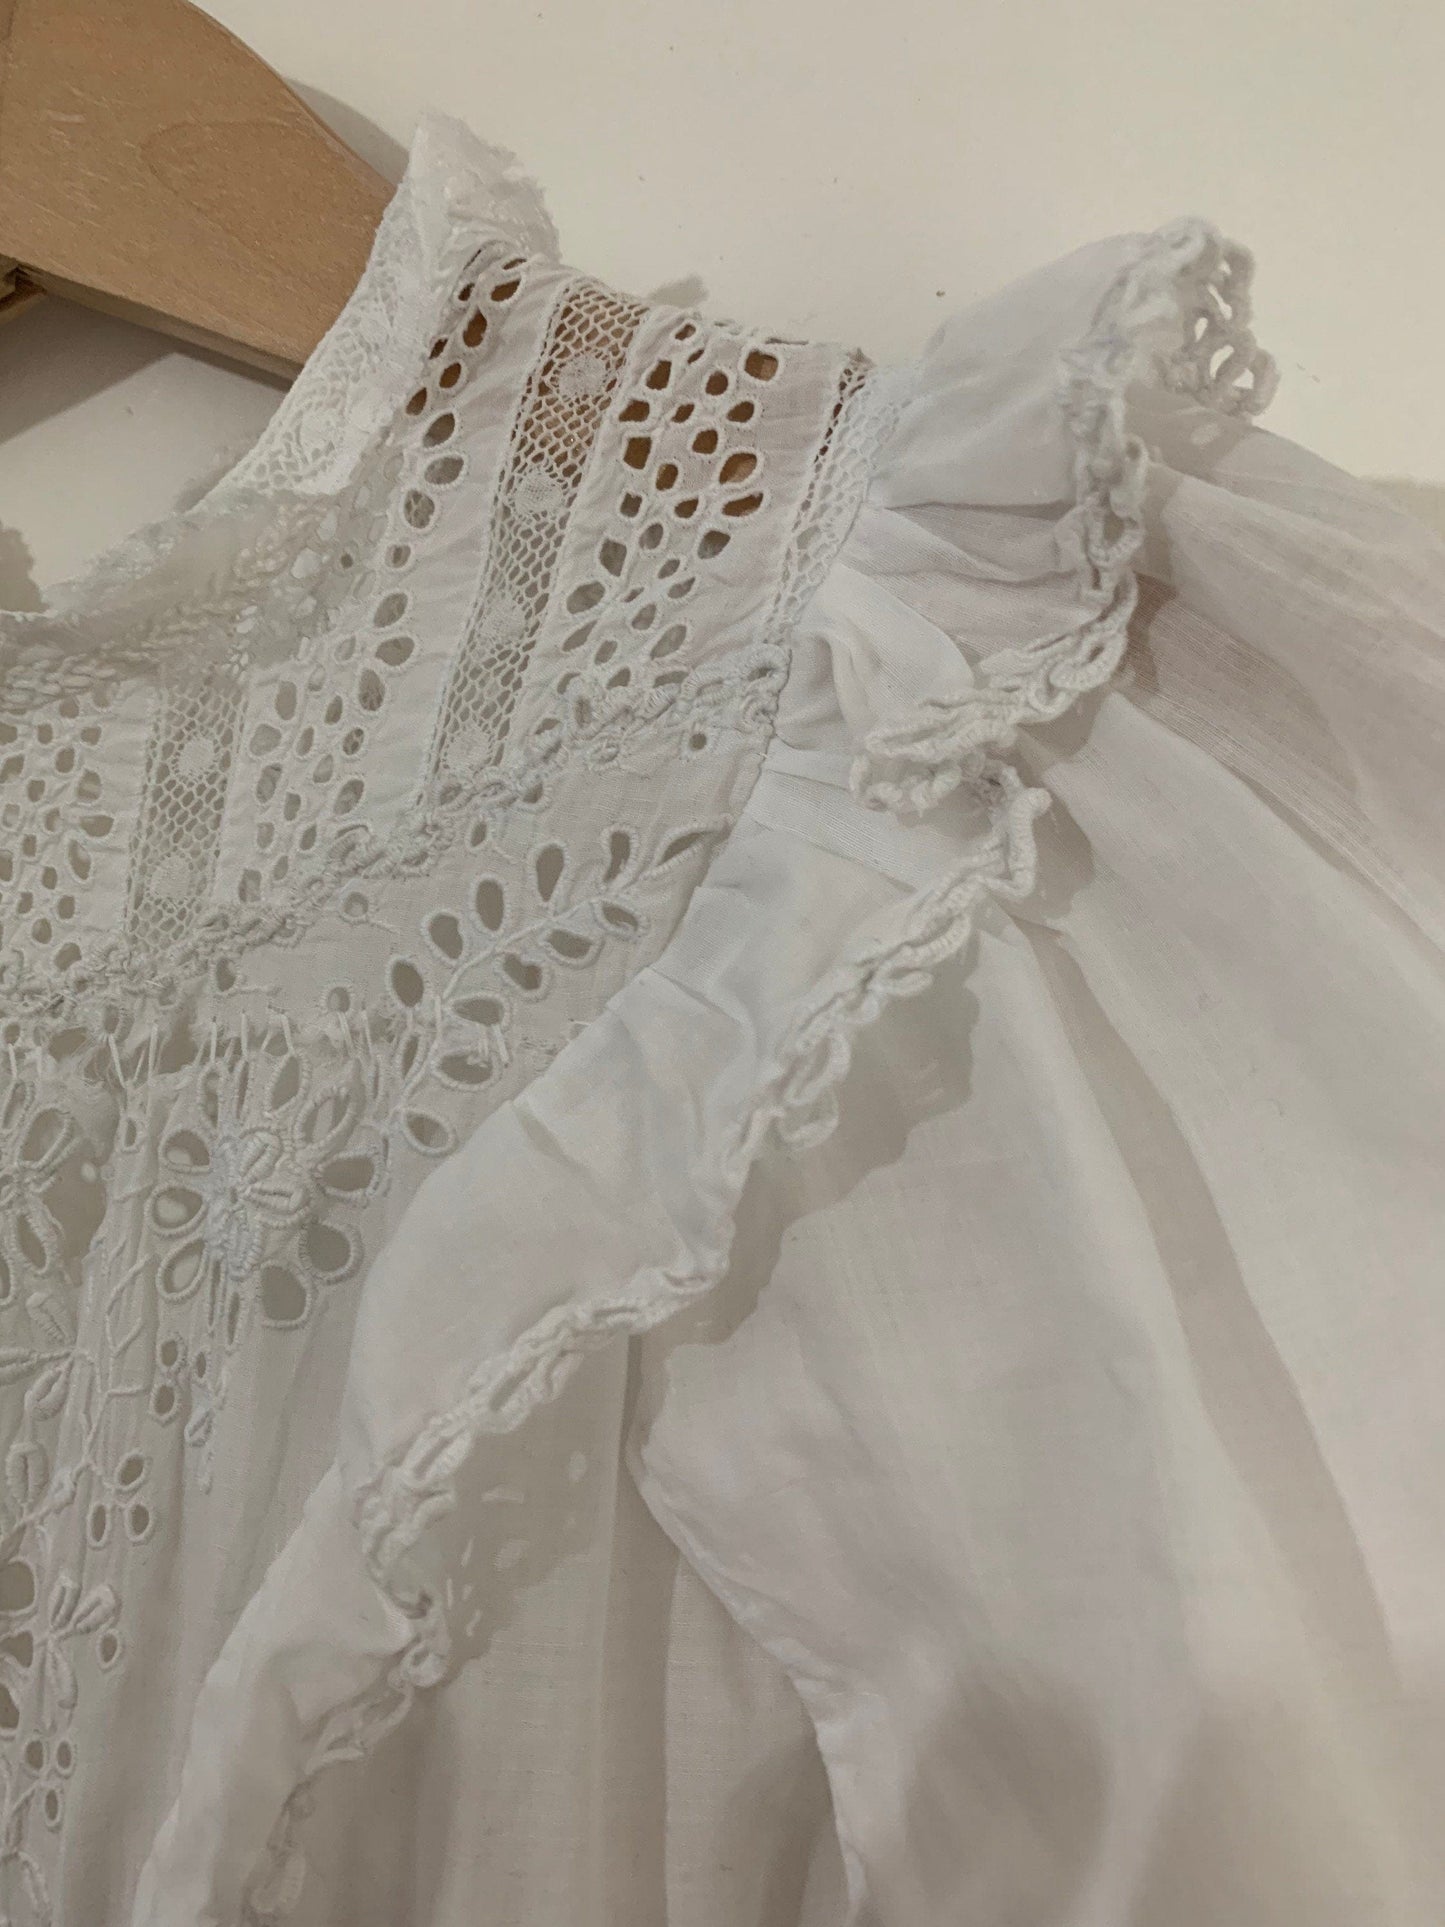 Antique Christening Gown, 19th Century Christening Gown, Heirloom Broiderie Anglais Christening Gown, Antique Dress, White Dolls Dress